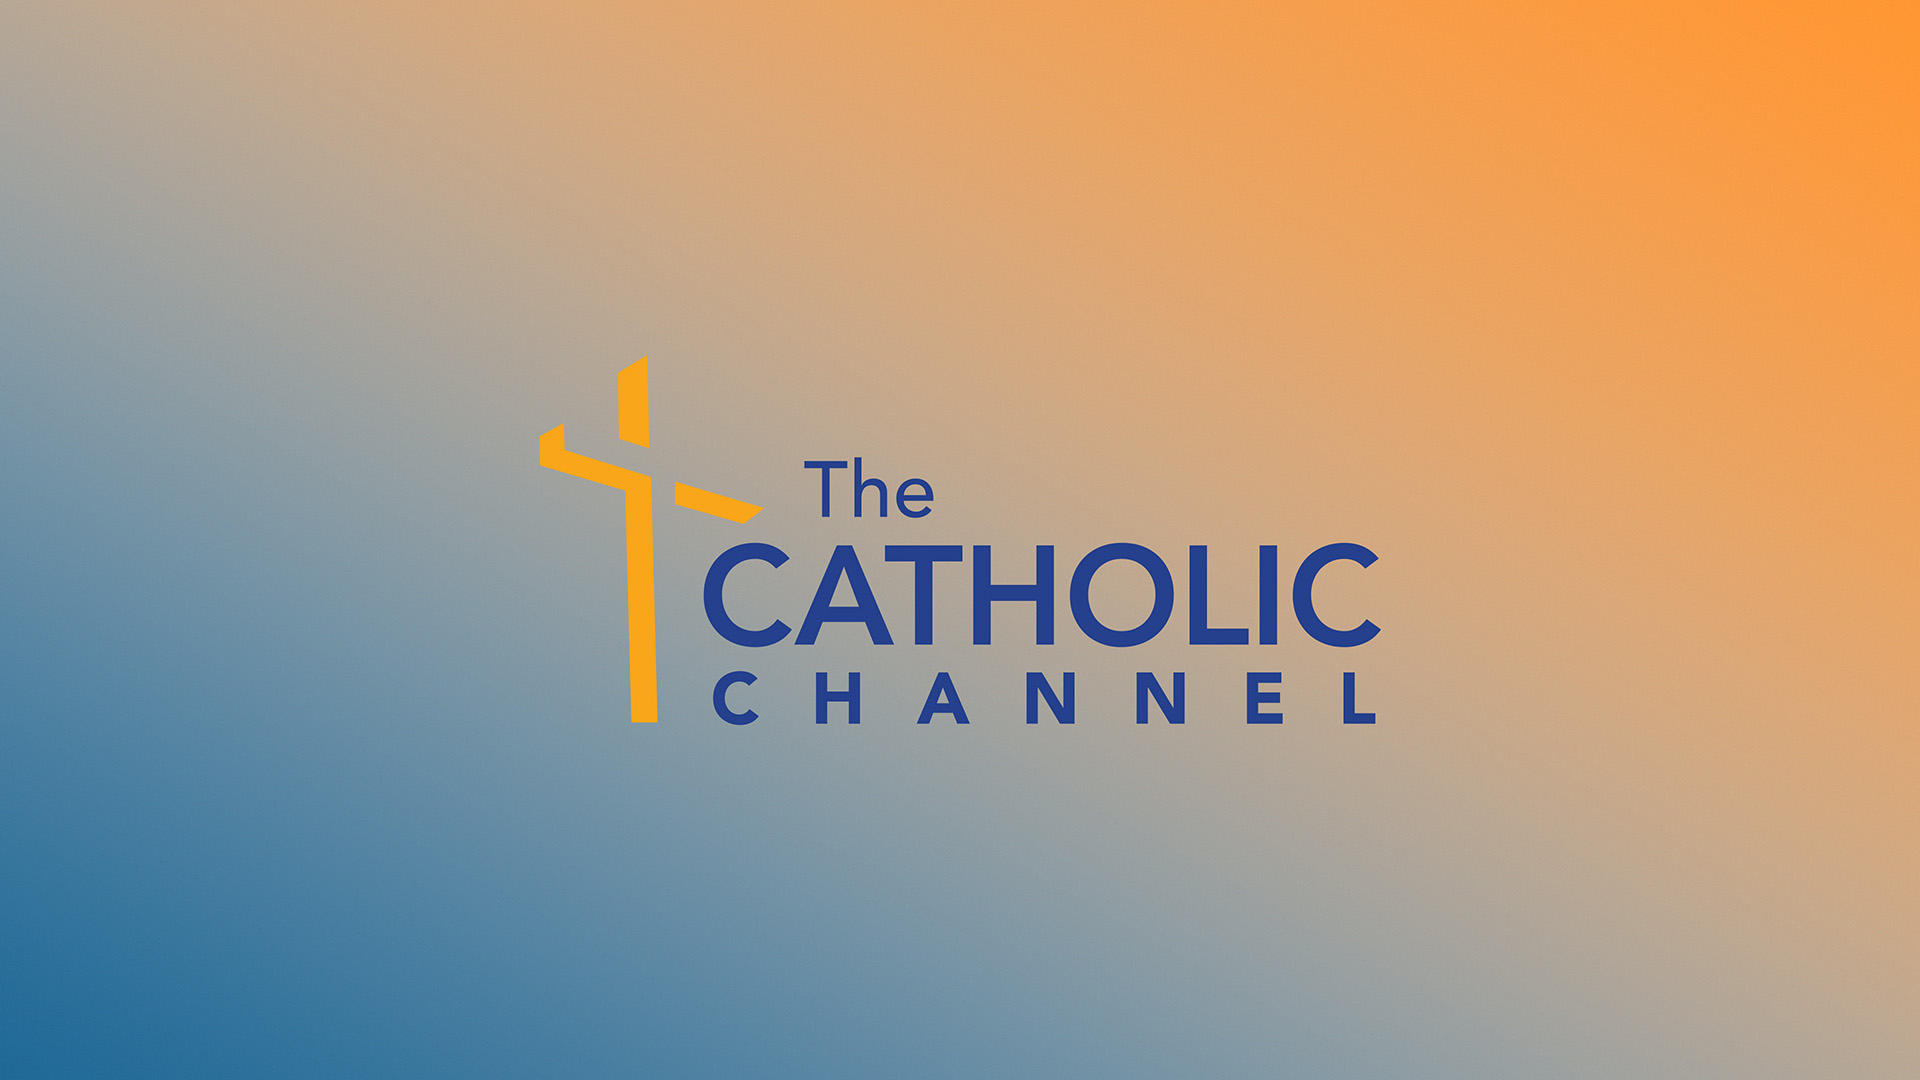 SiriusXM The Catholic Channel logo on blue orange gradient background